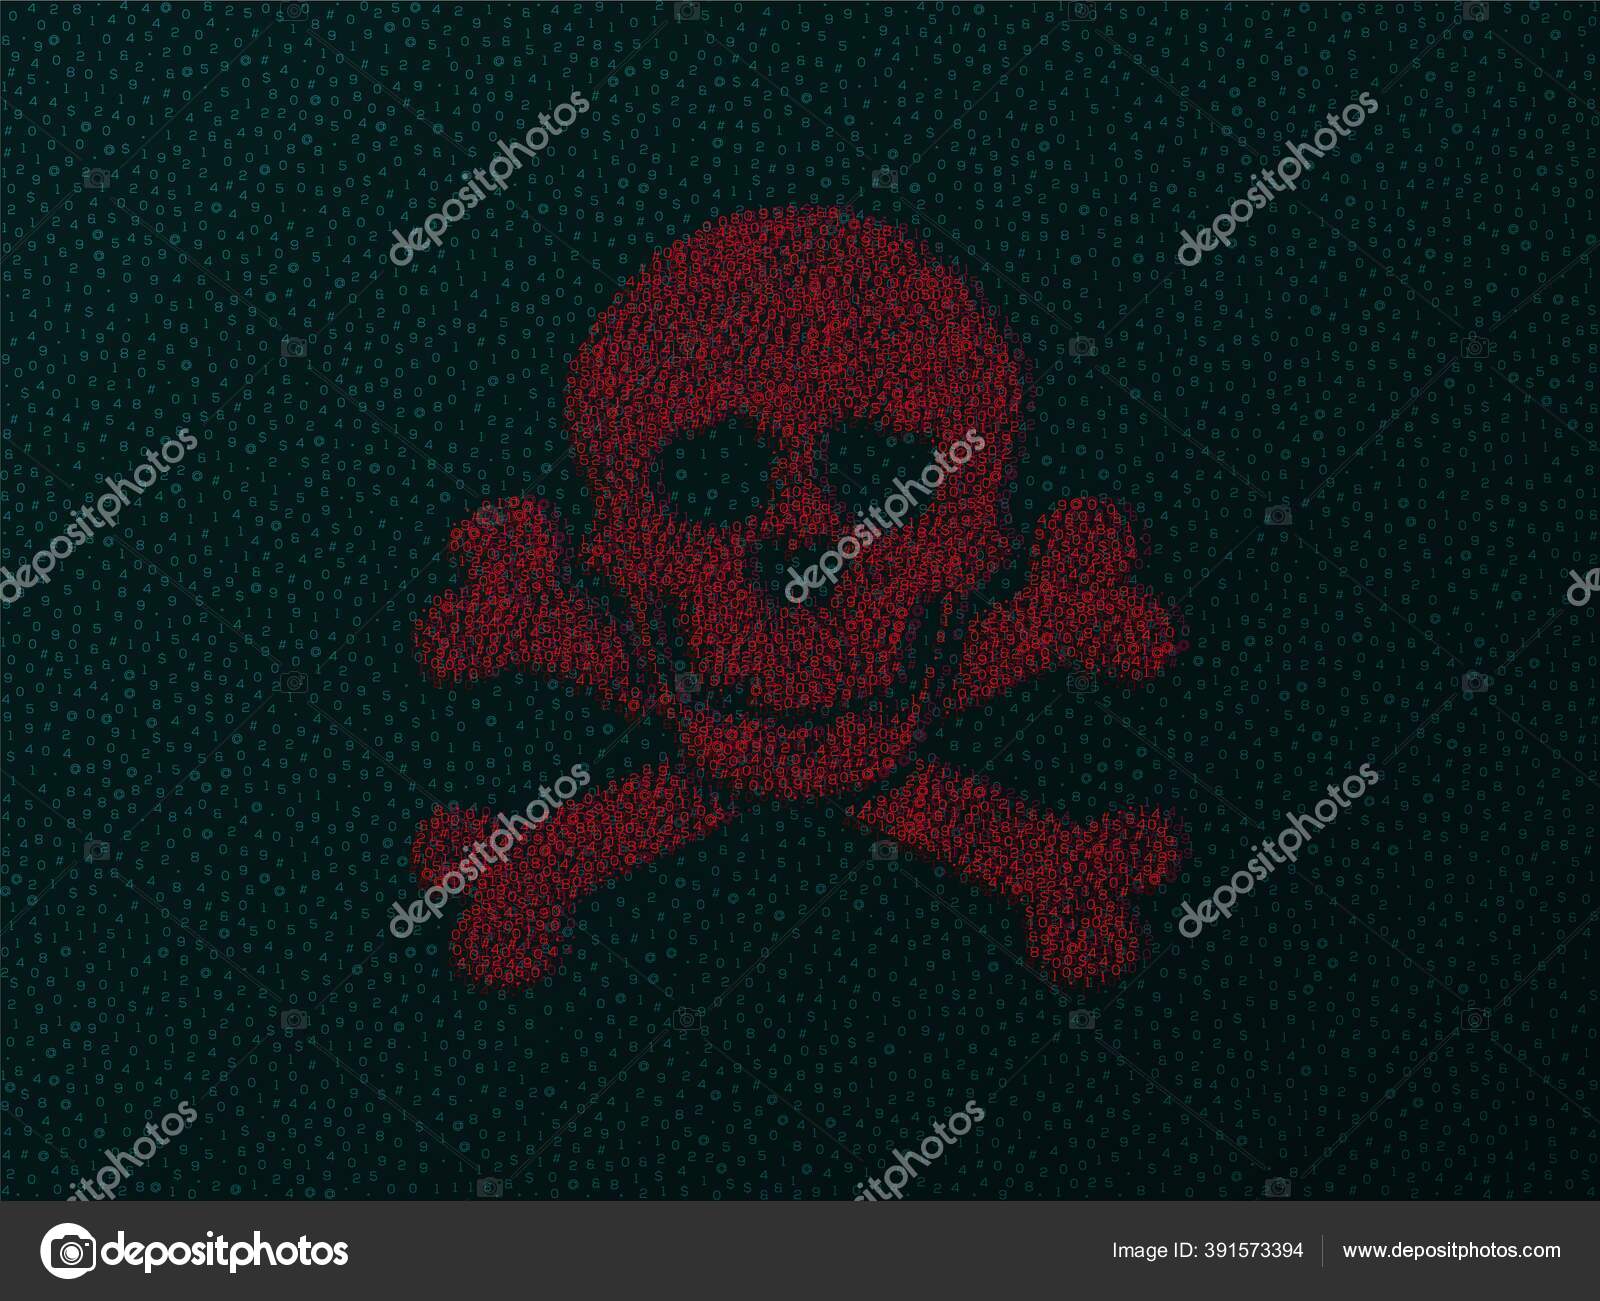 Virus Bug Code Red Abstract Crossbones Skull Background Of Green Code Threat Of Hacking Vector Image By C Dezidezi Vector Stock